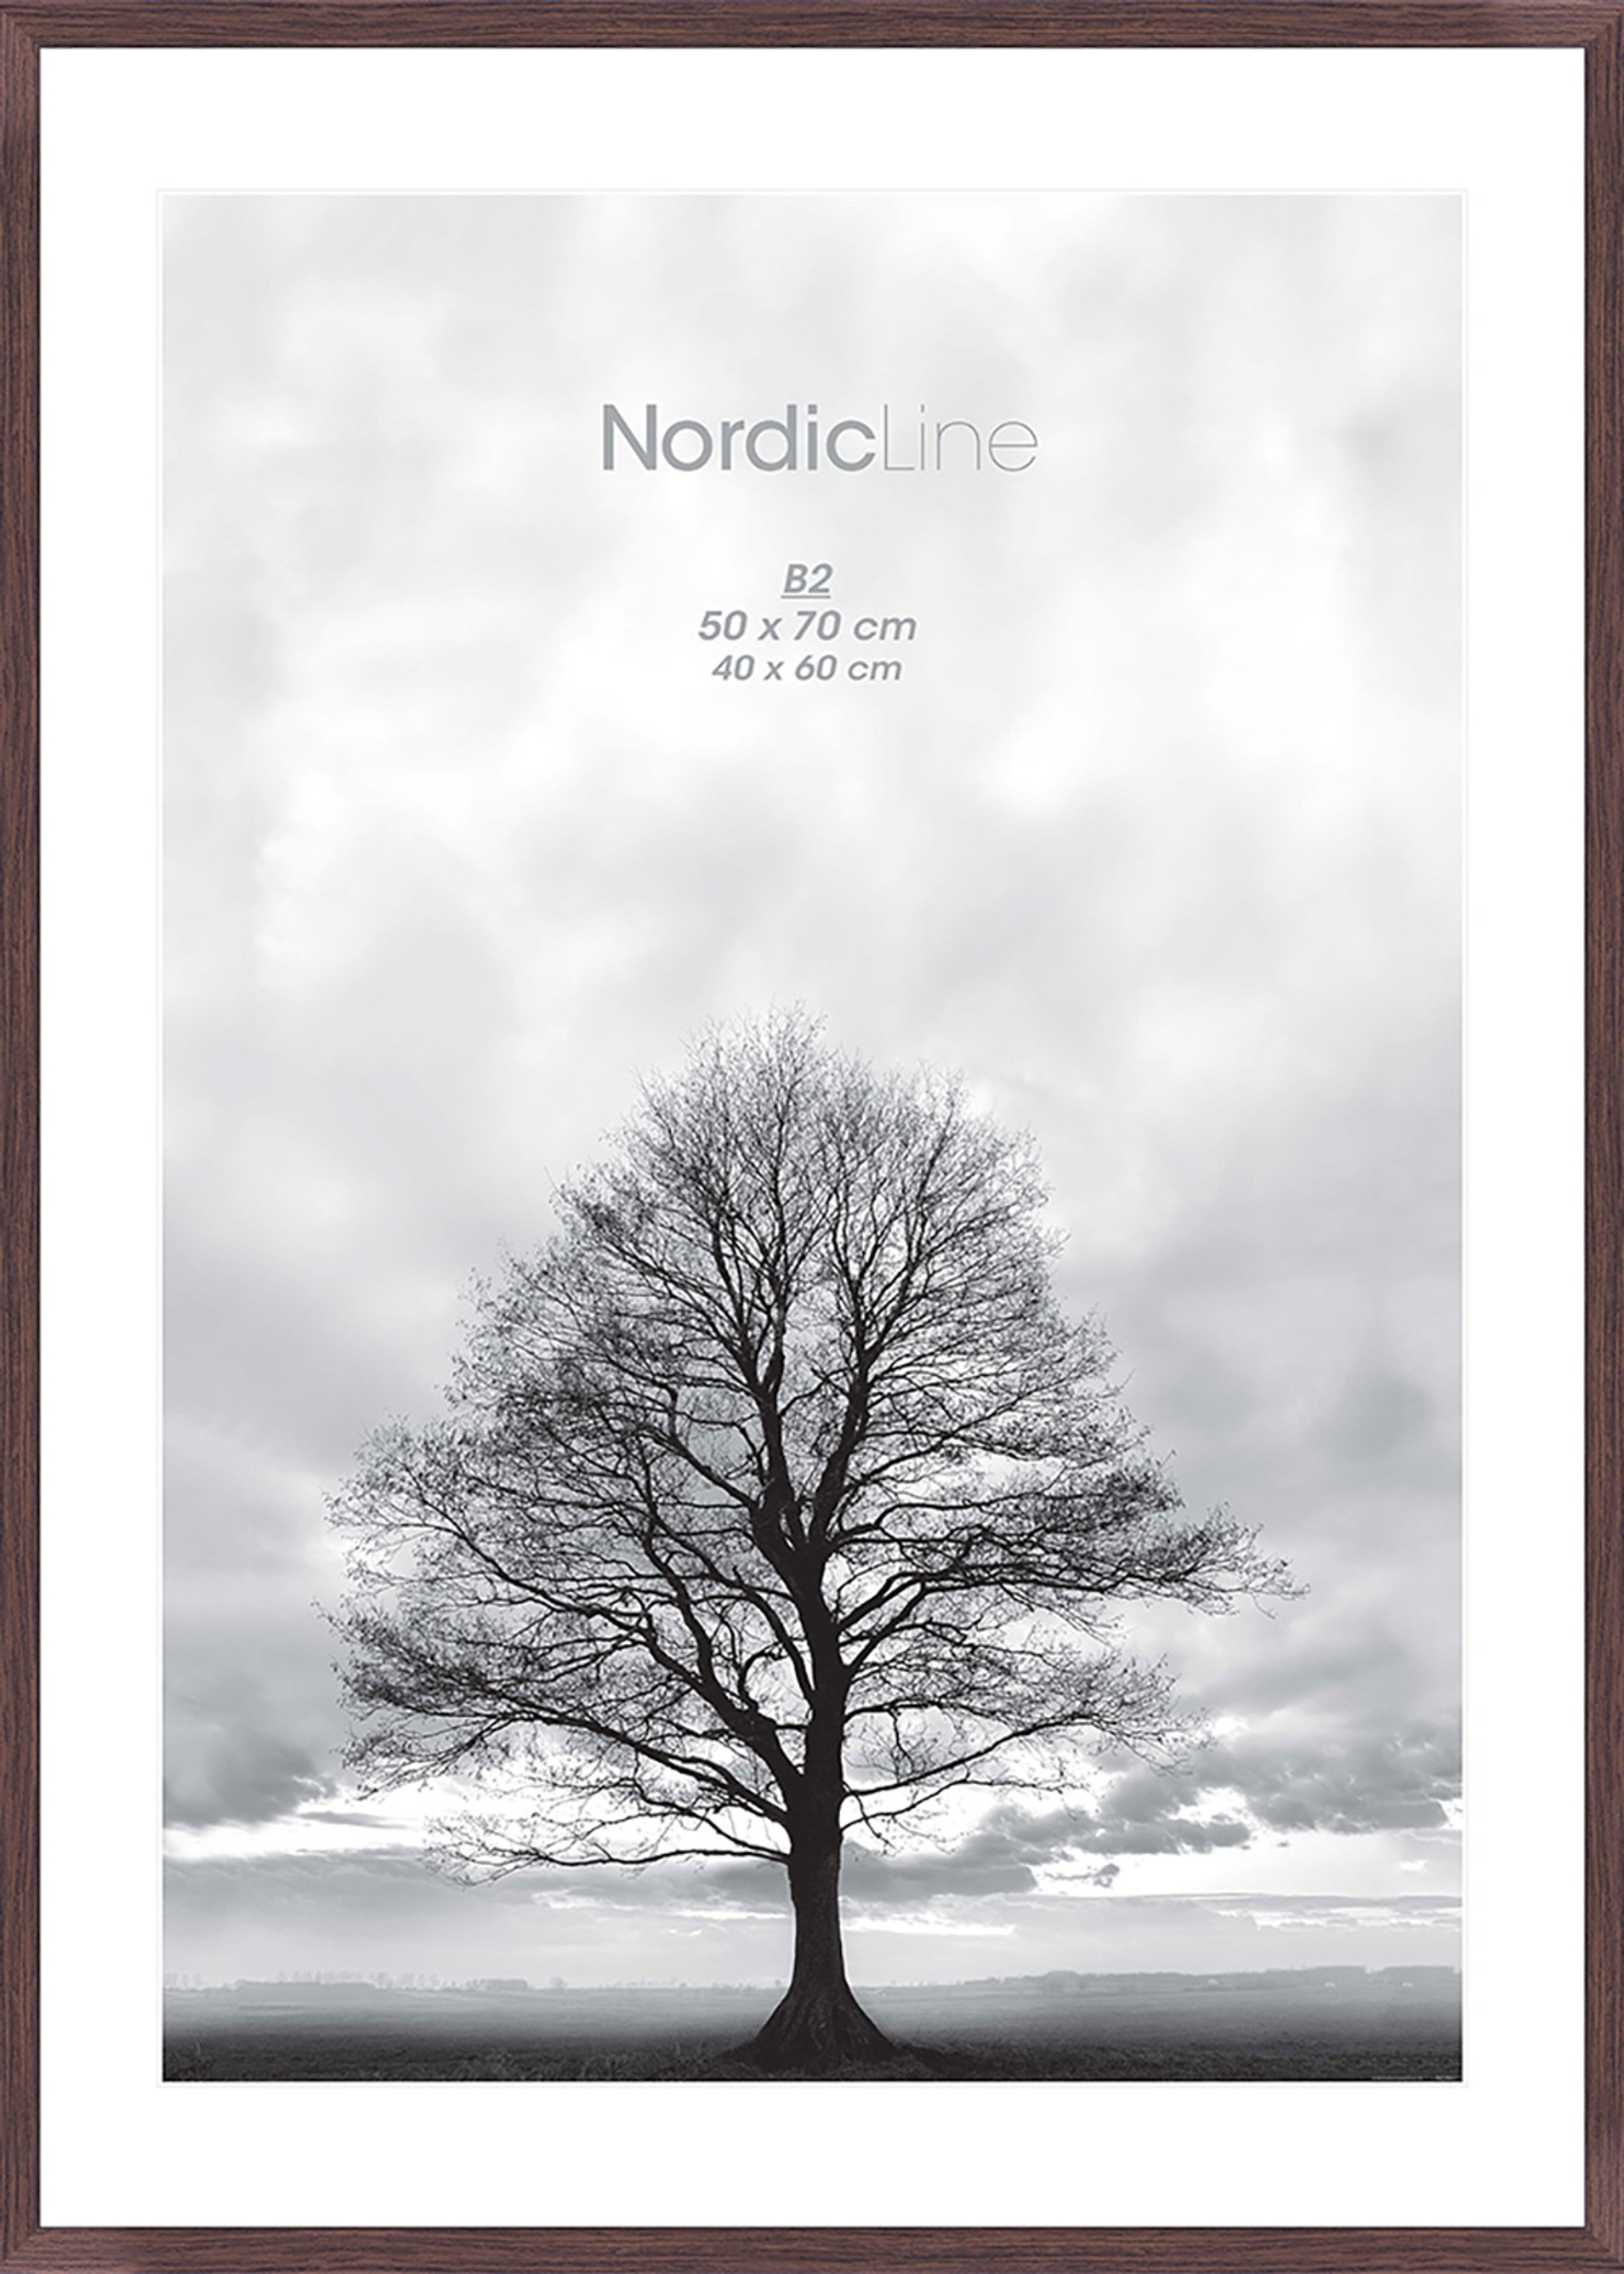 Nordic Line - Frames - Nordic Line frames - Cherry - Cherry